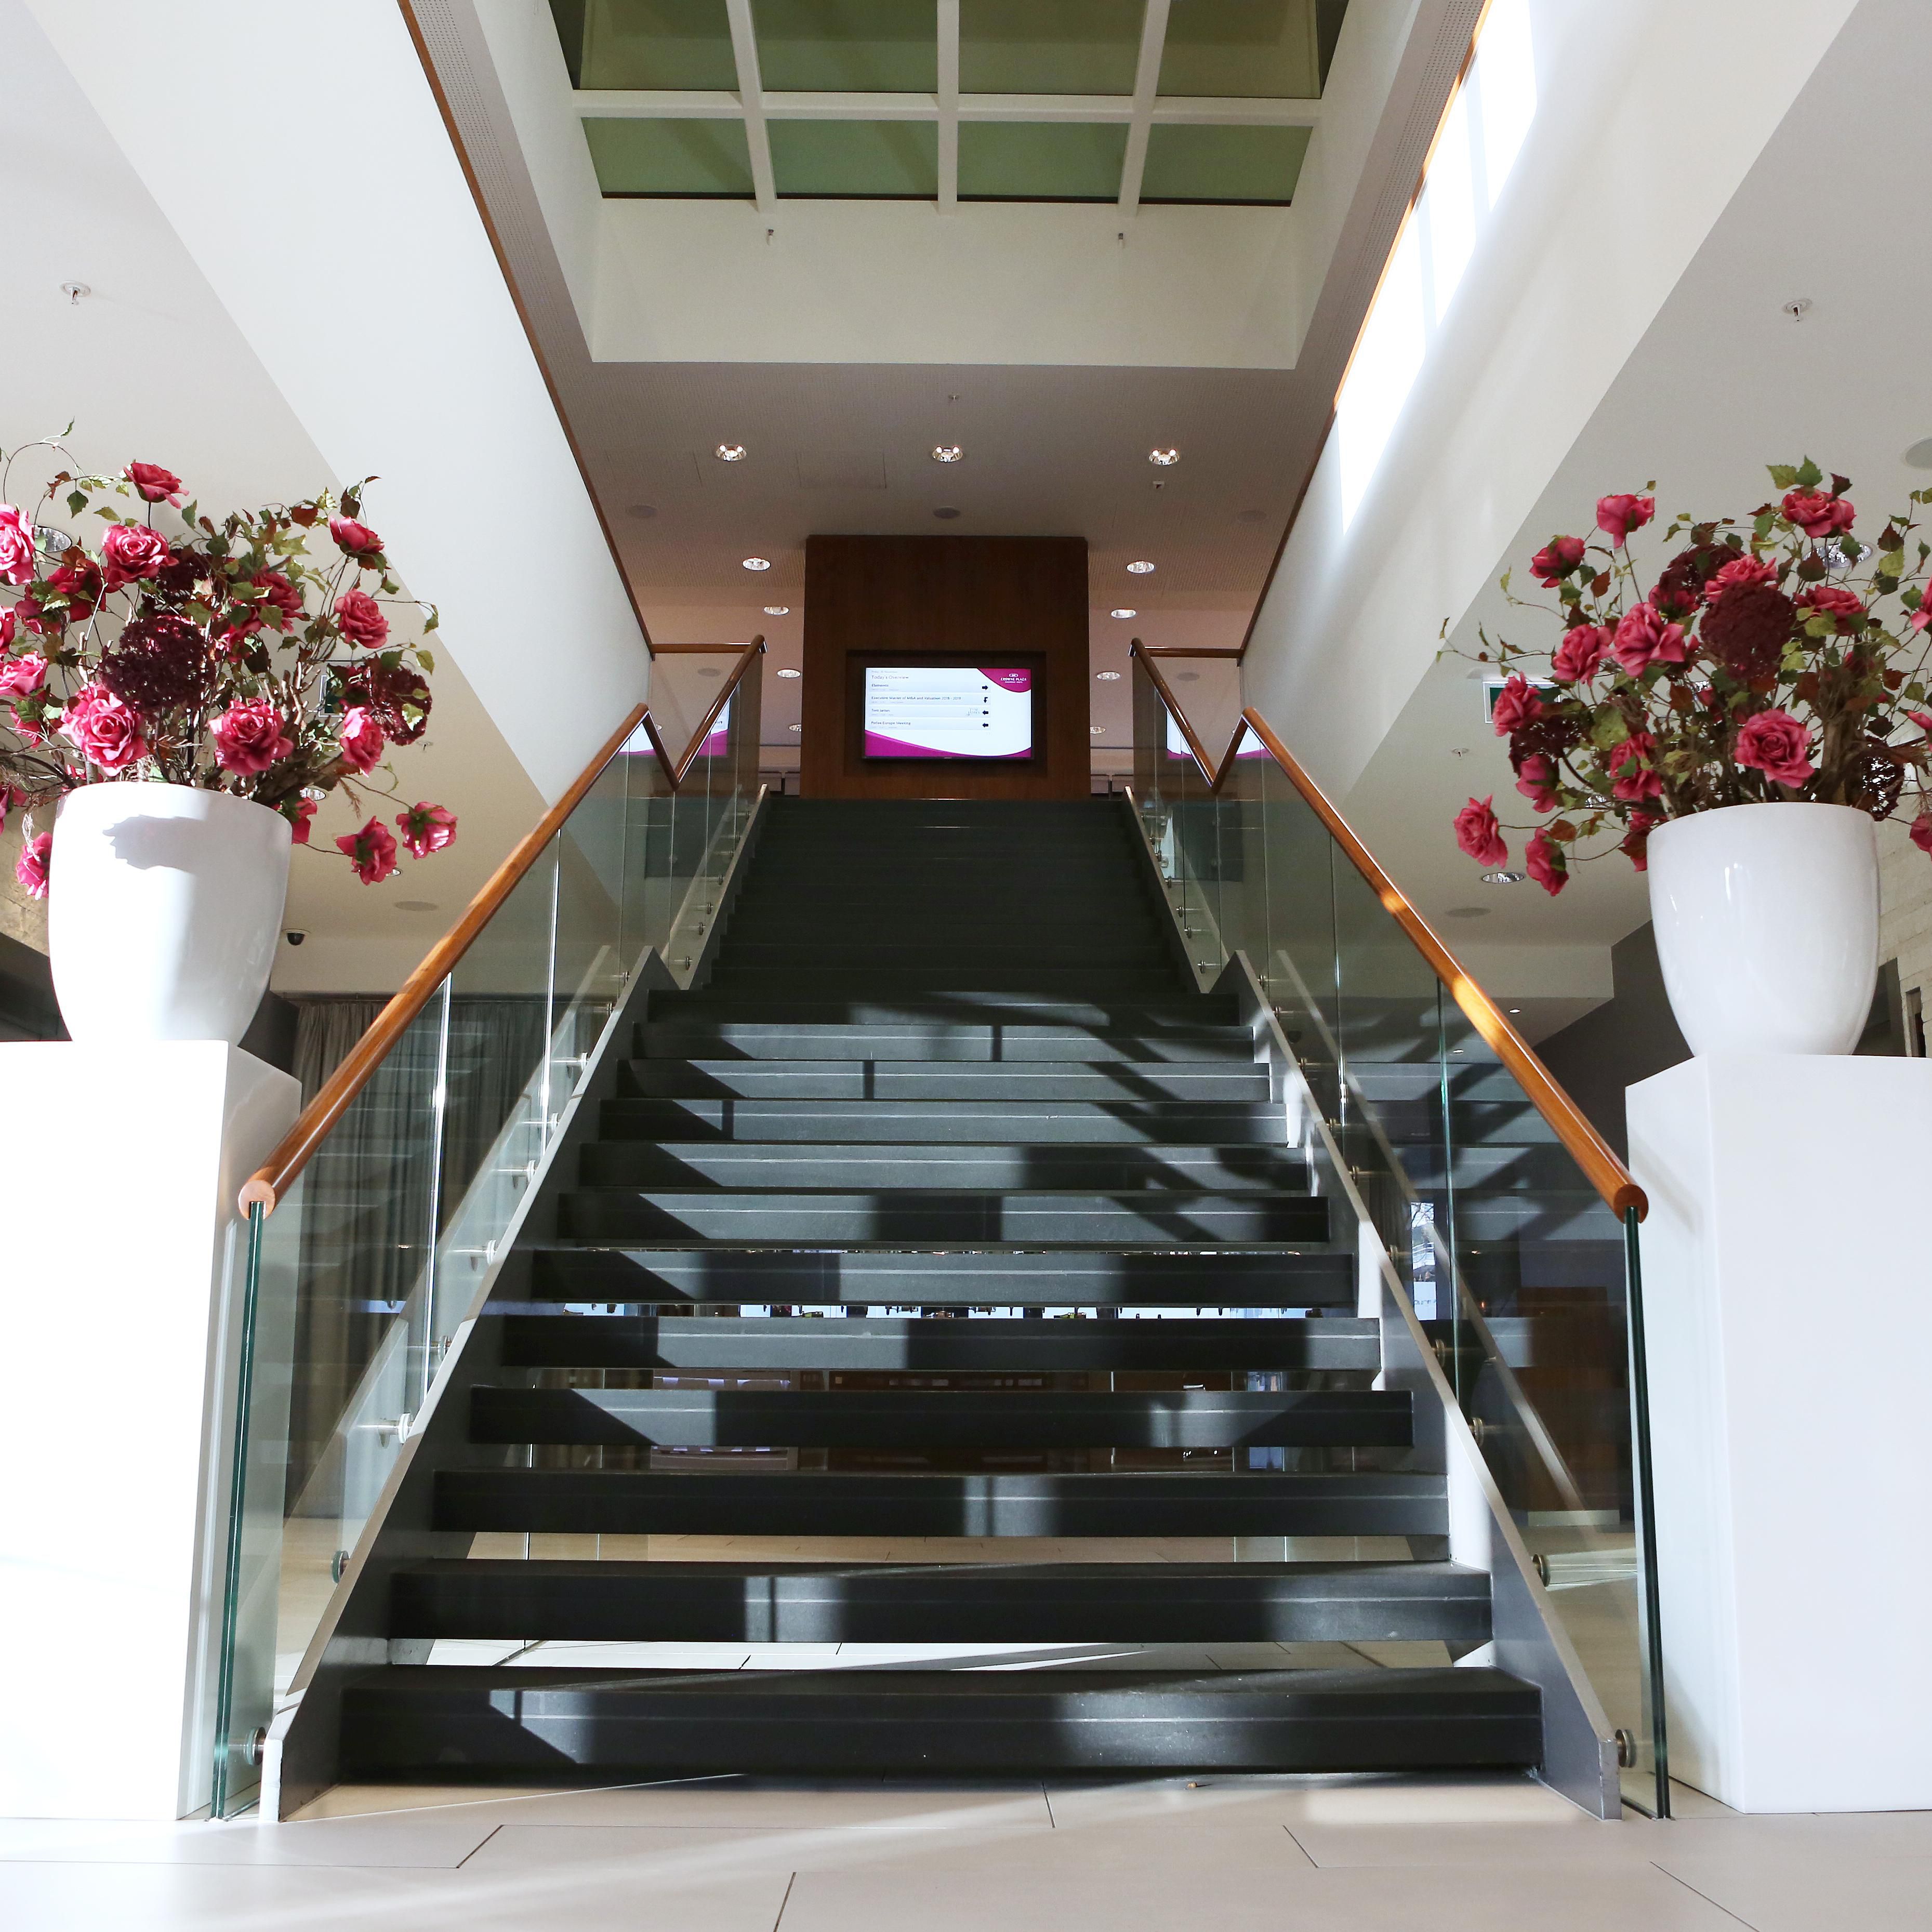 Indrukwekkende trappenhuis in de hotel lobby